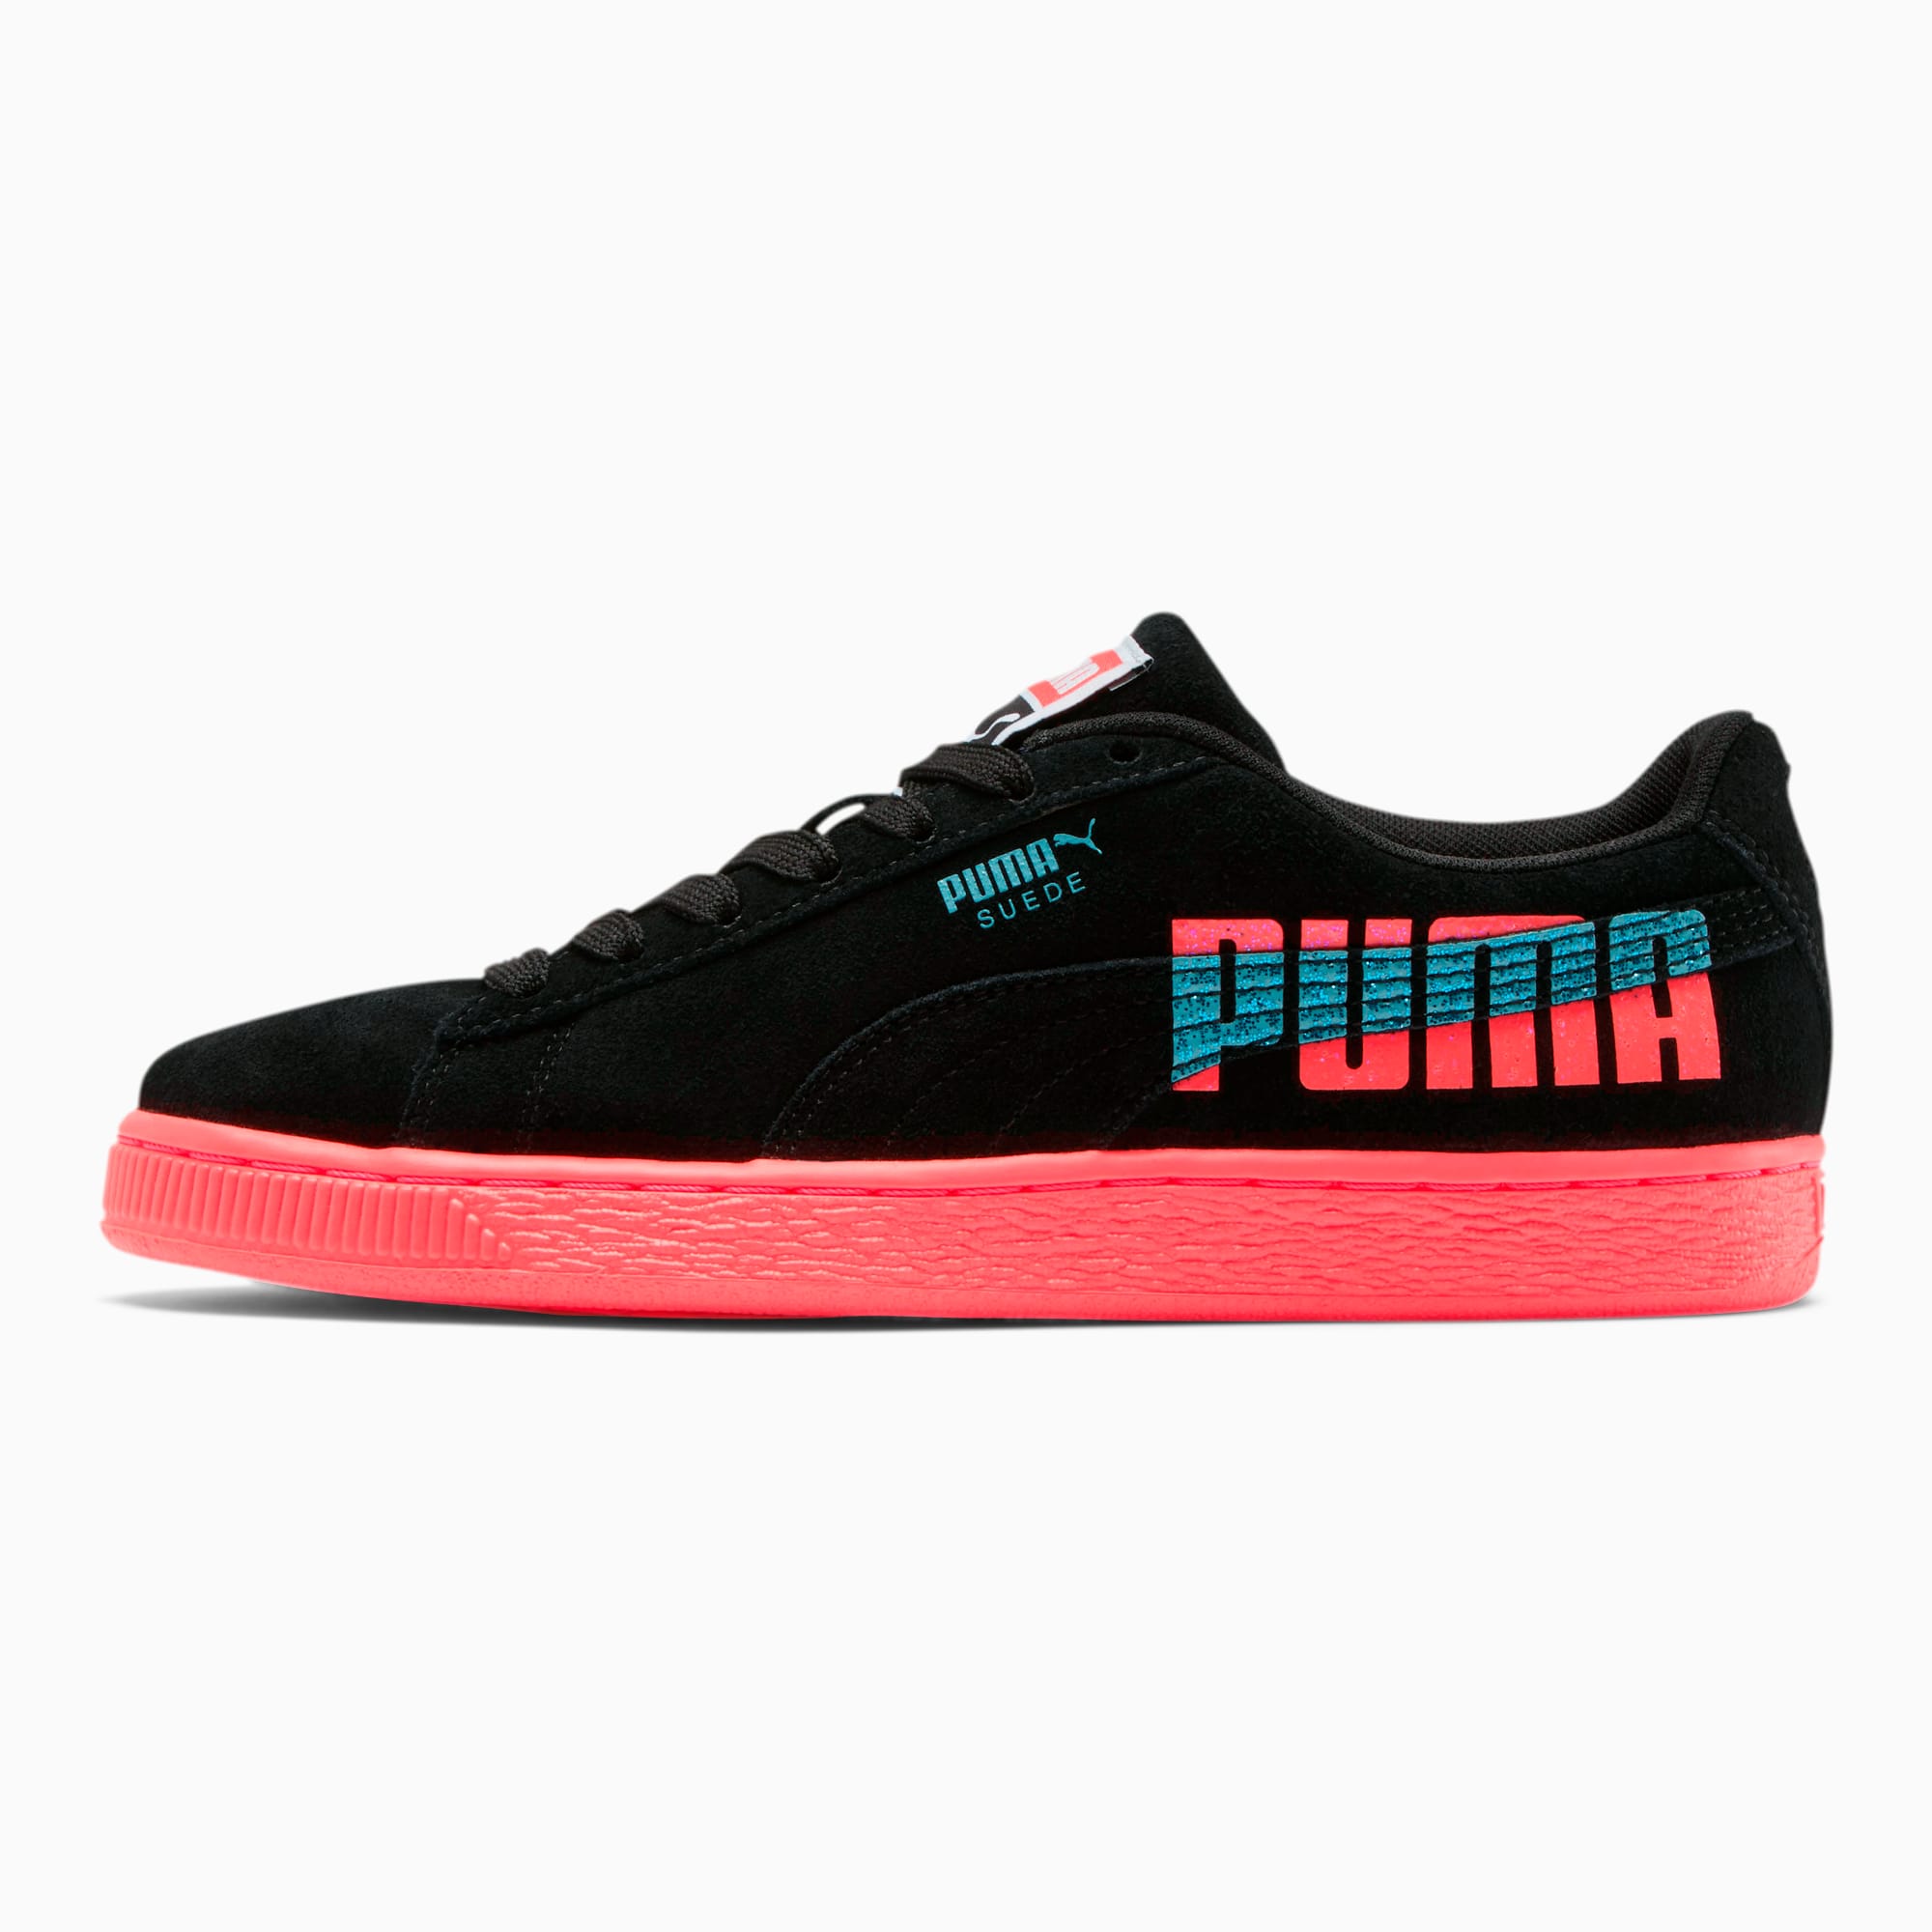 classic puma women's sneakers